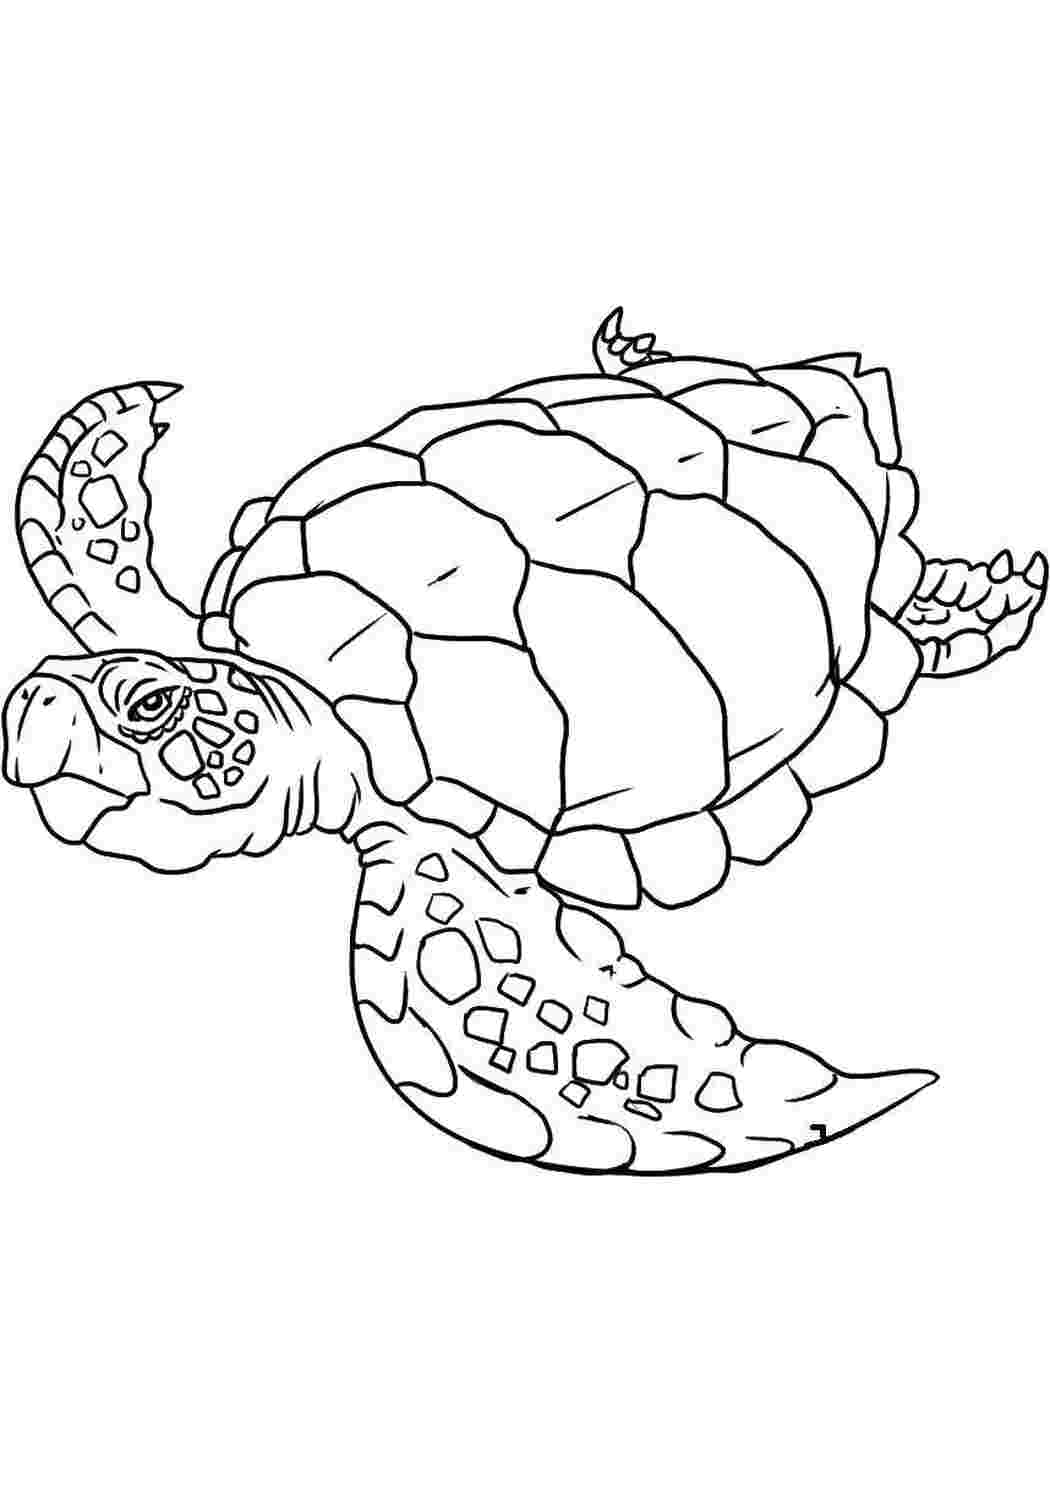 Раскраски Морская черепаха Океан Морская черепаха